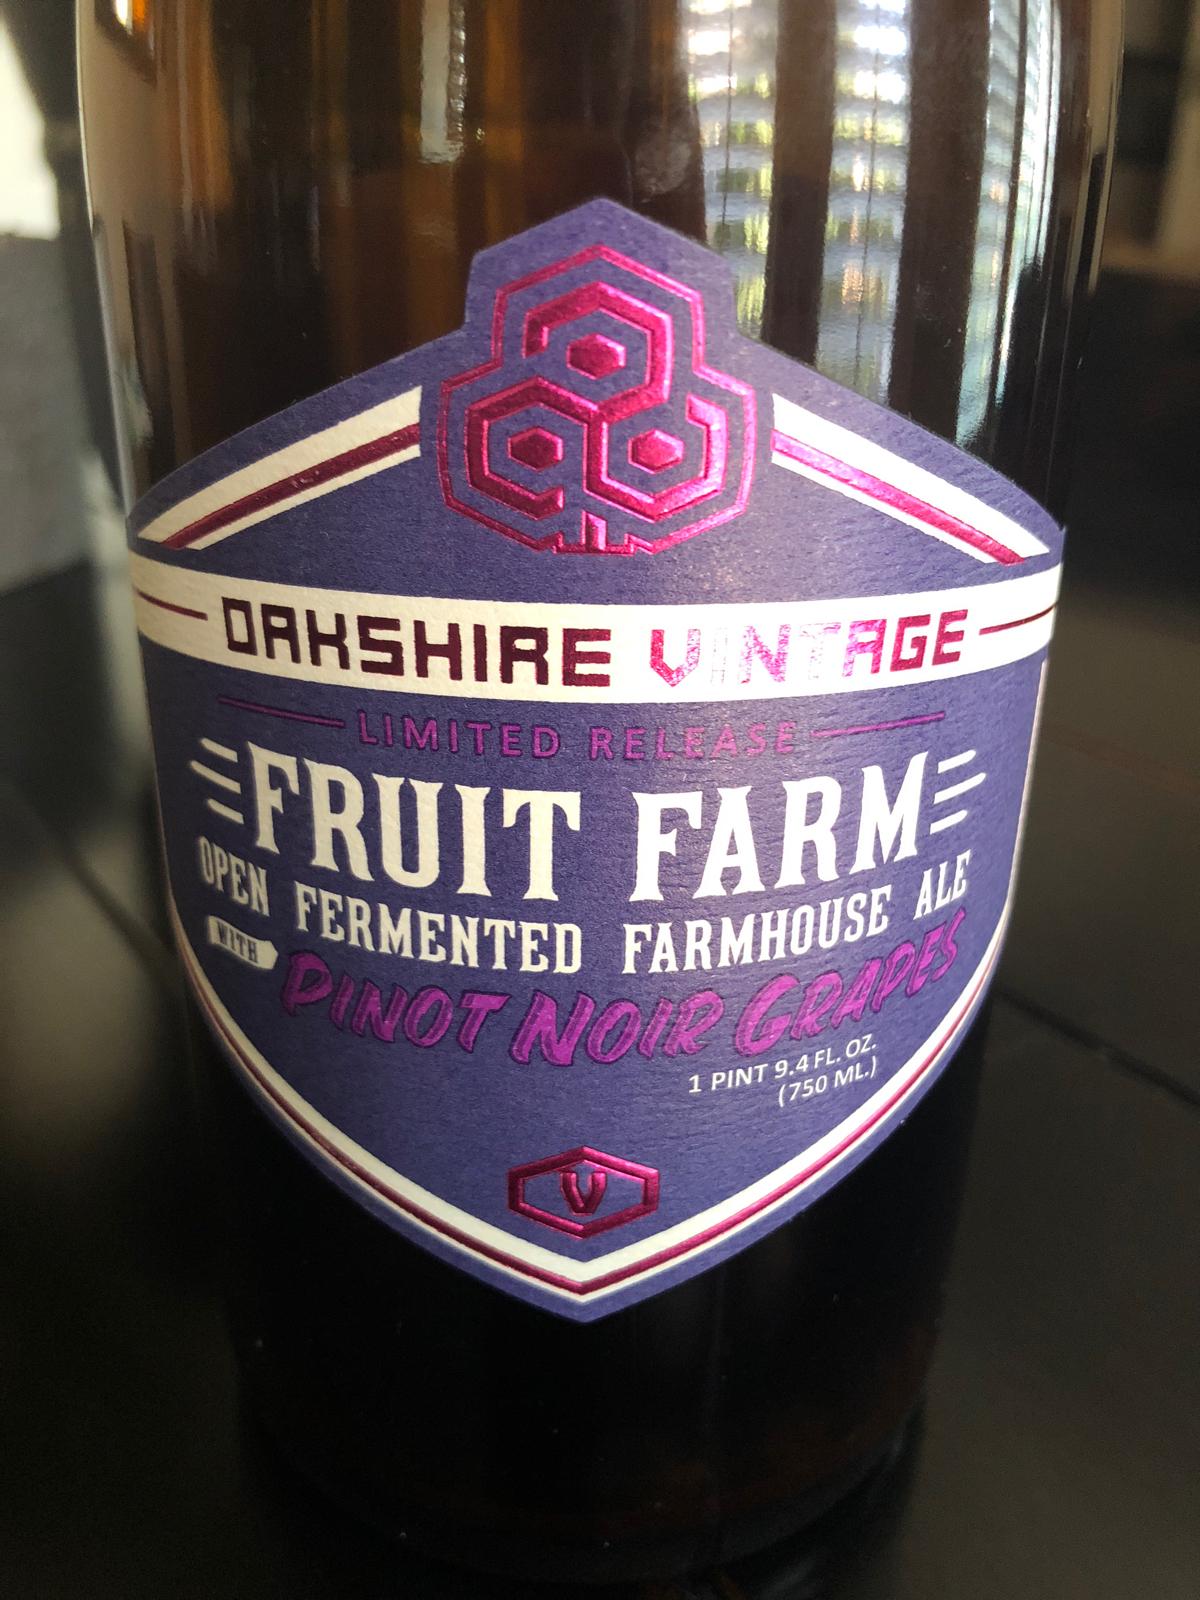 Fruit Farm: Open Fermented Farmhouse Ale